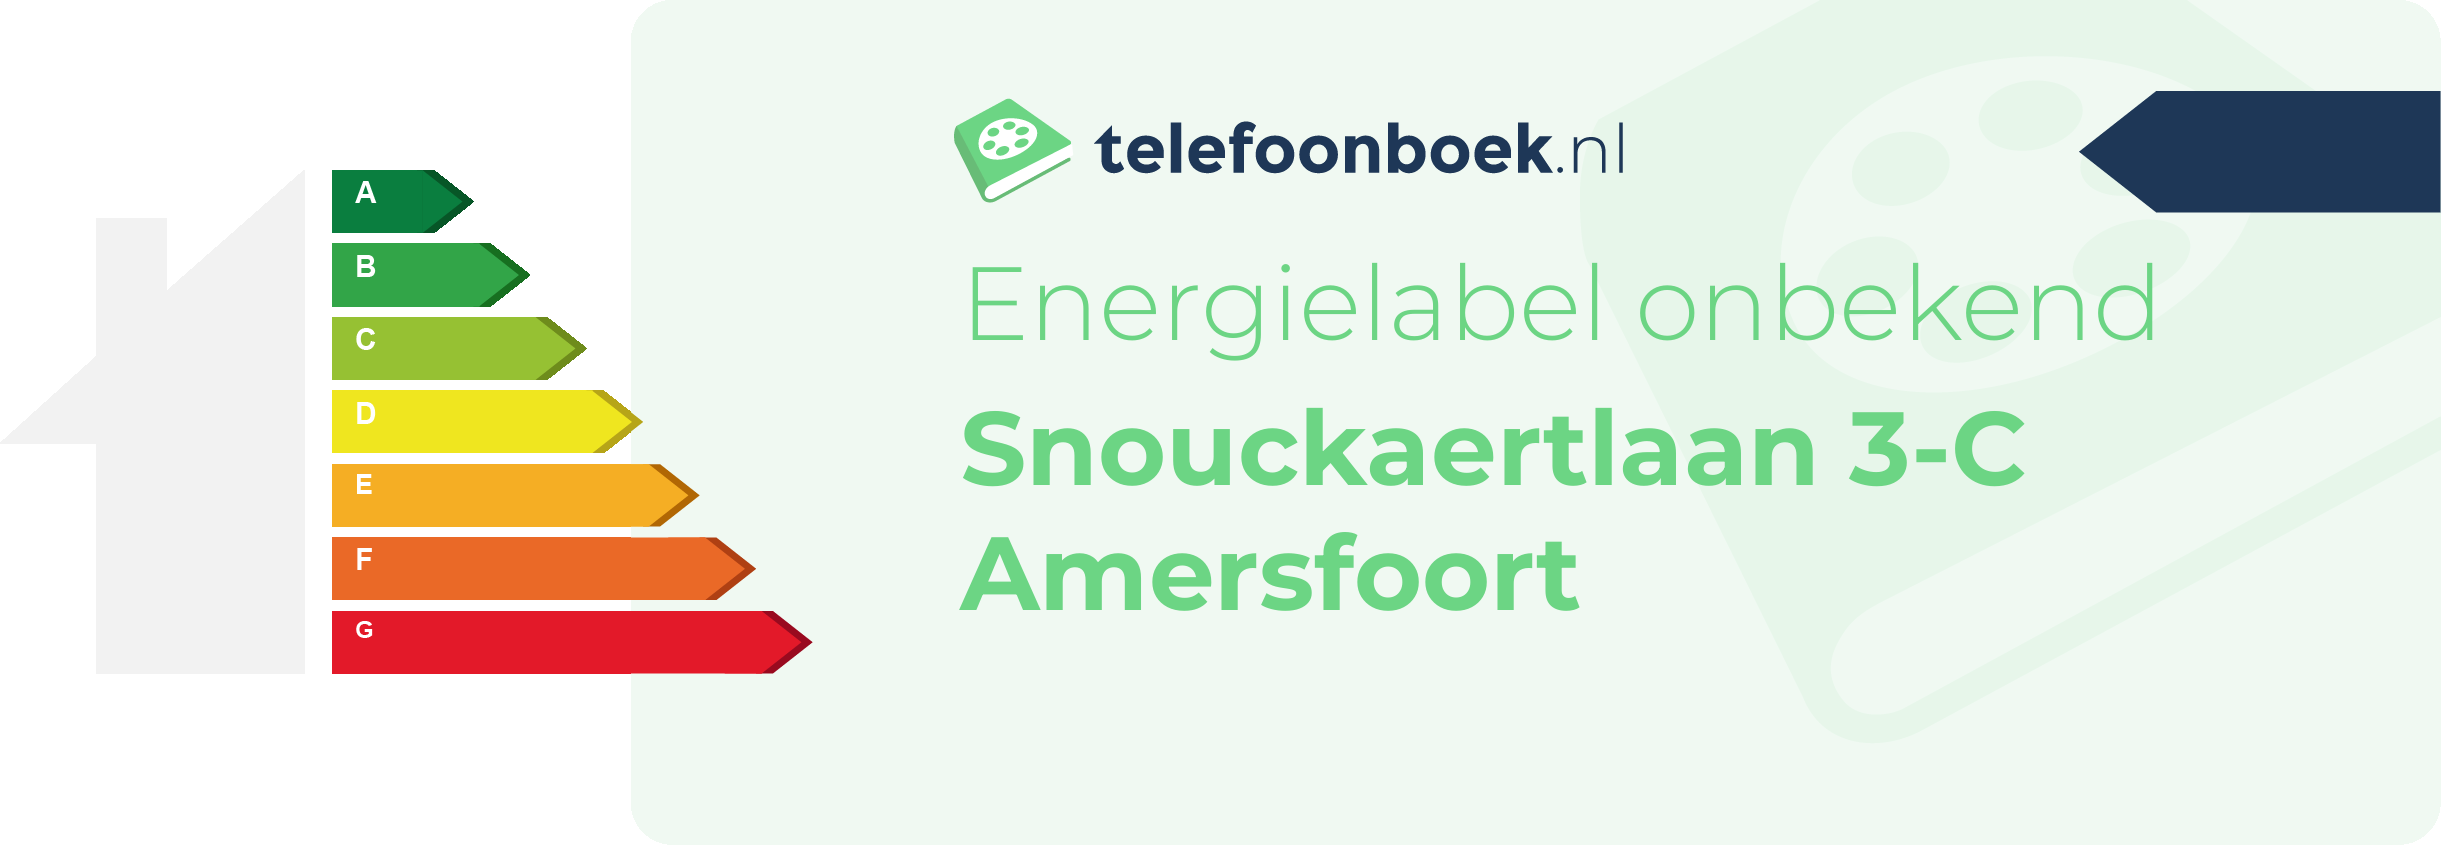 Energielabel Snouckaertlaan 3-C Amersfoort